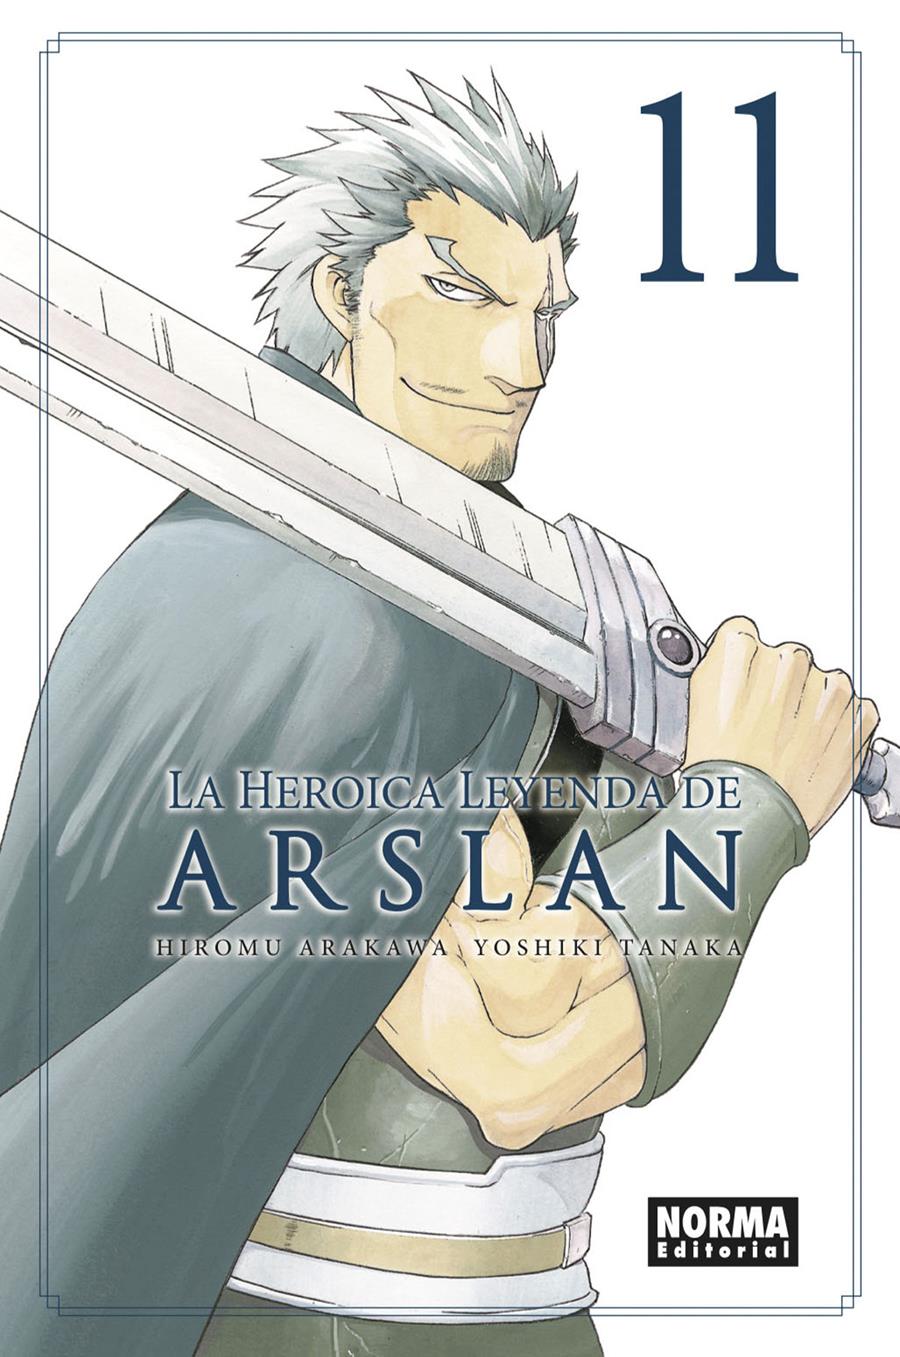 La heroica leyenda de Arslan 11 | N0521-NOR28 | Yoshiki Tanaka, Hiromu Arakawa | Terra de Còmic - Tu tienda de cómics online especializada en cómics, manga y merchandising